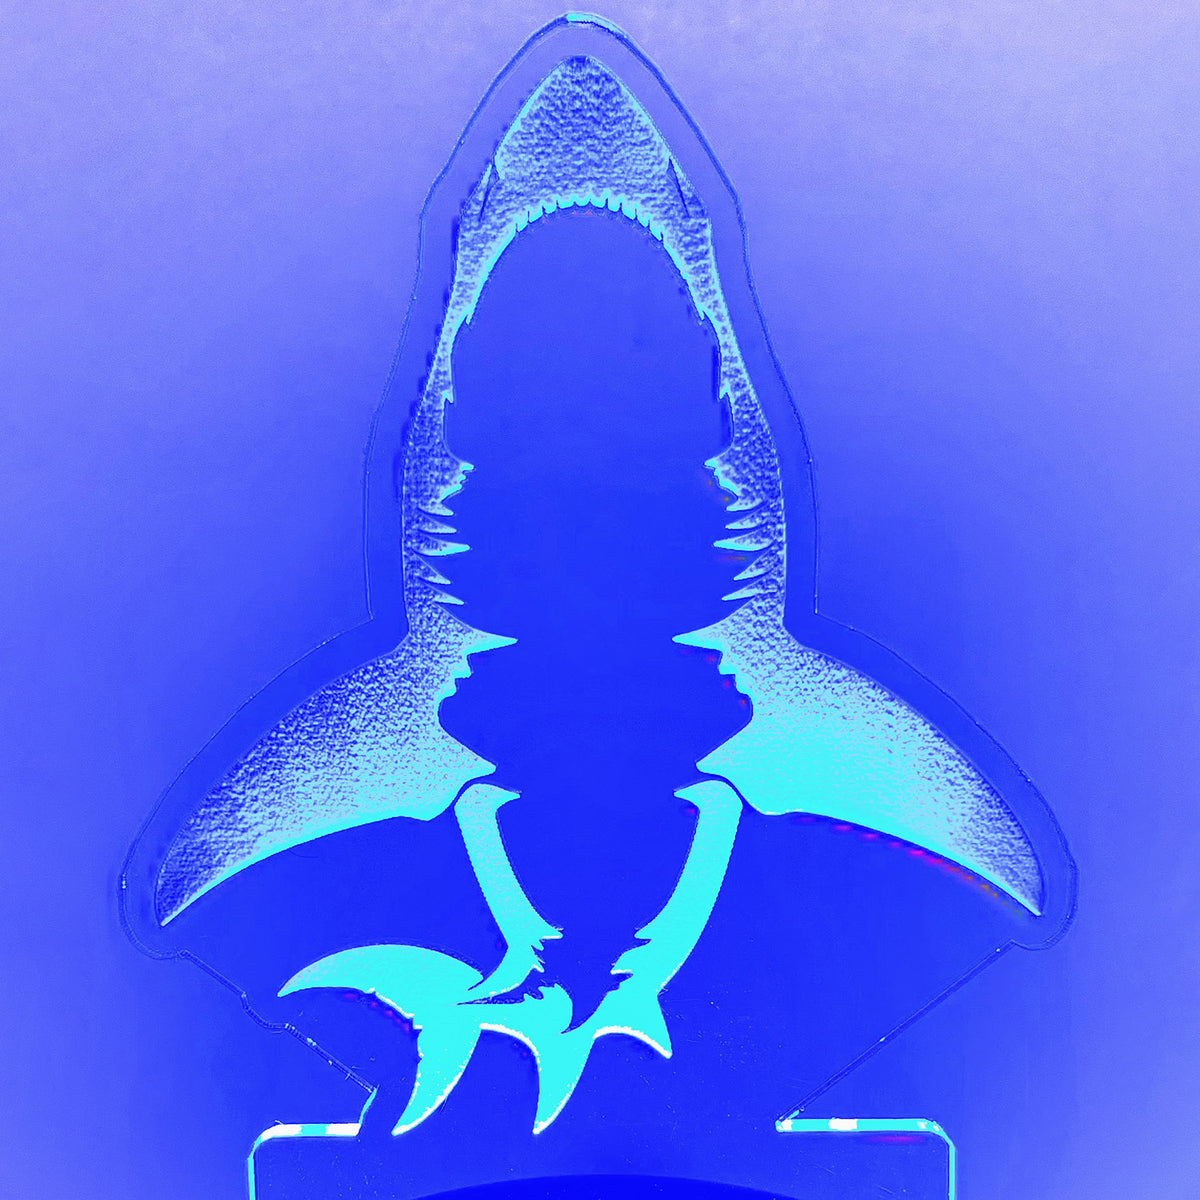 Nightlights Under the Sea - The Great White Shark LED Nightlight Insert